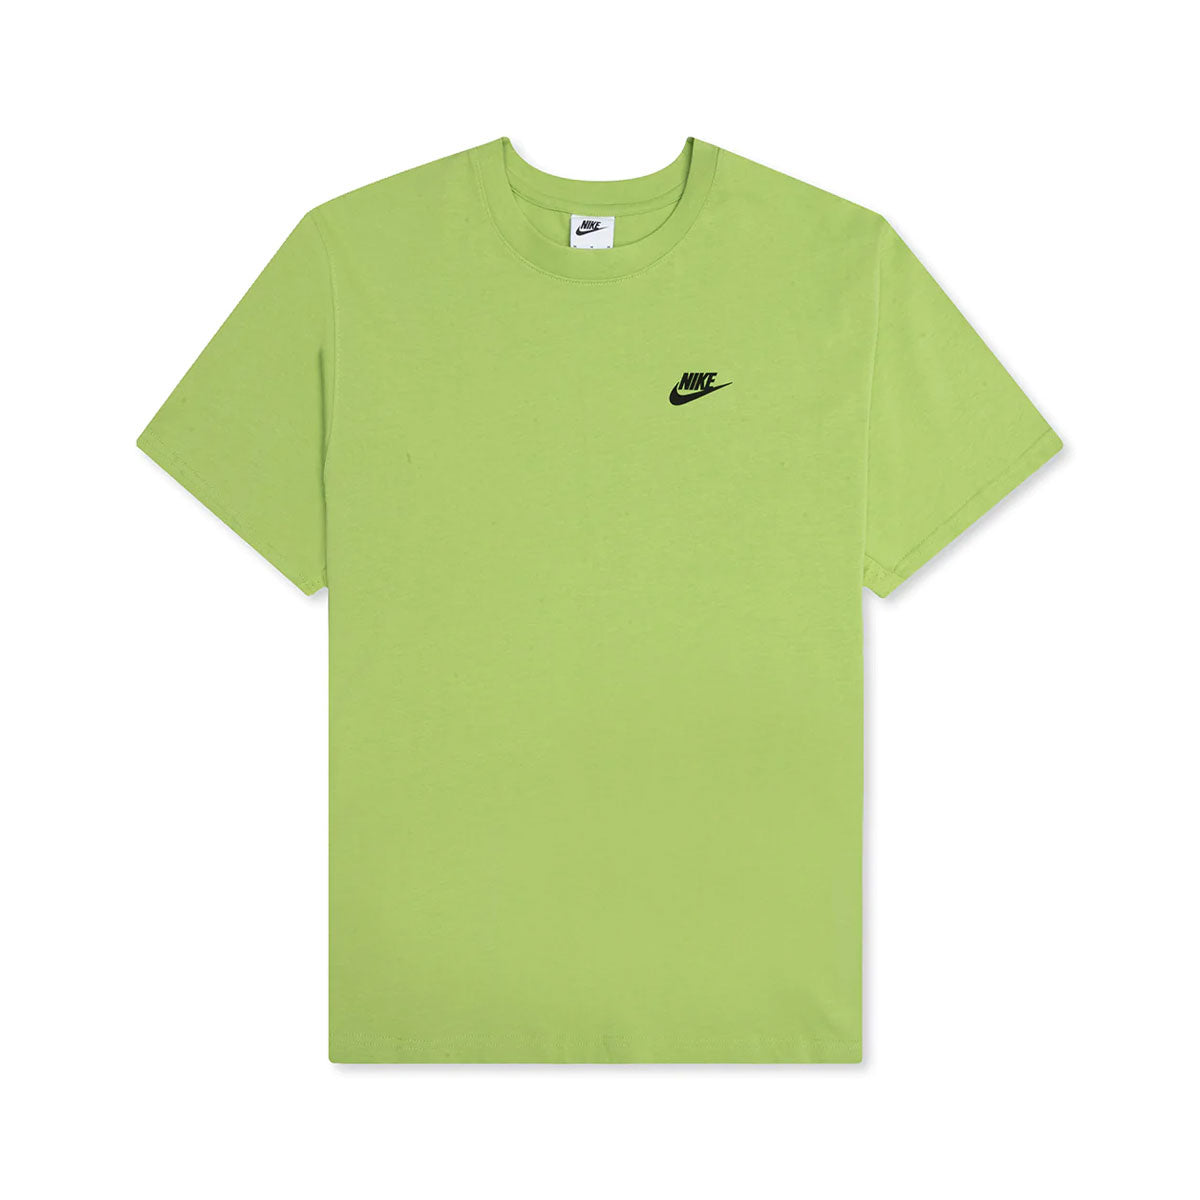 Nike Men's Lightweight Knit Short-Sleeve Top Vivid Green